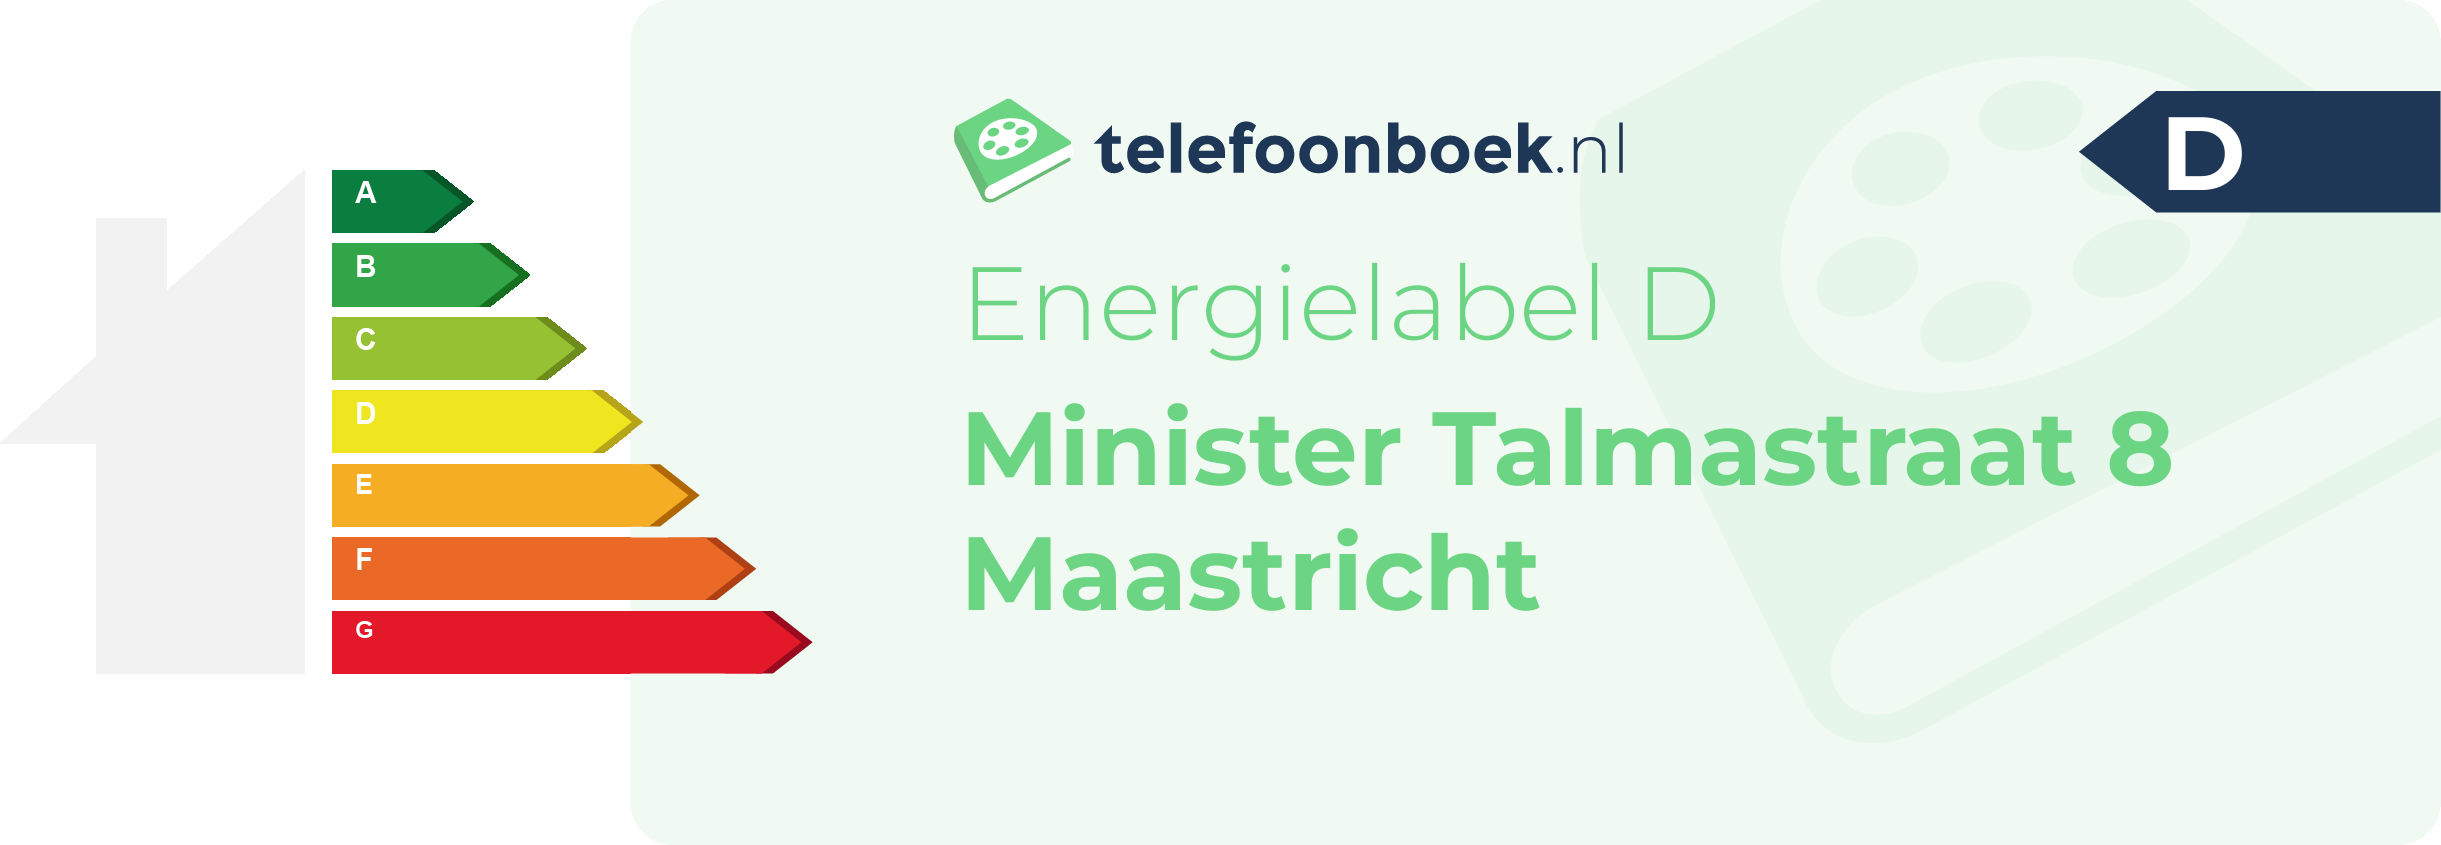 Energielabel Minister Talmastraat 8 Maastricht